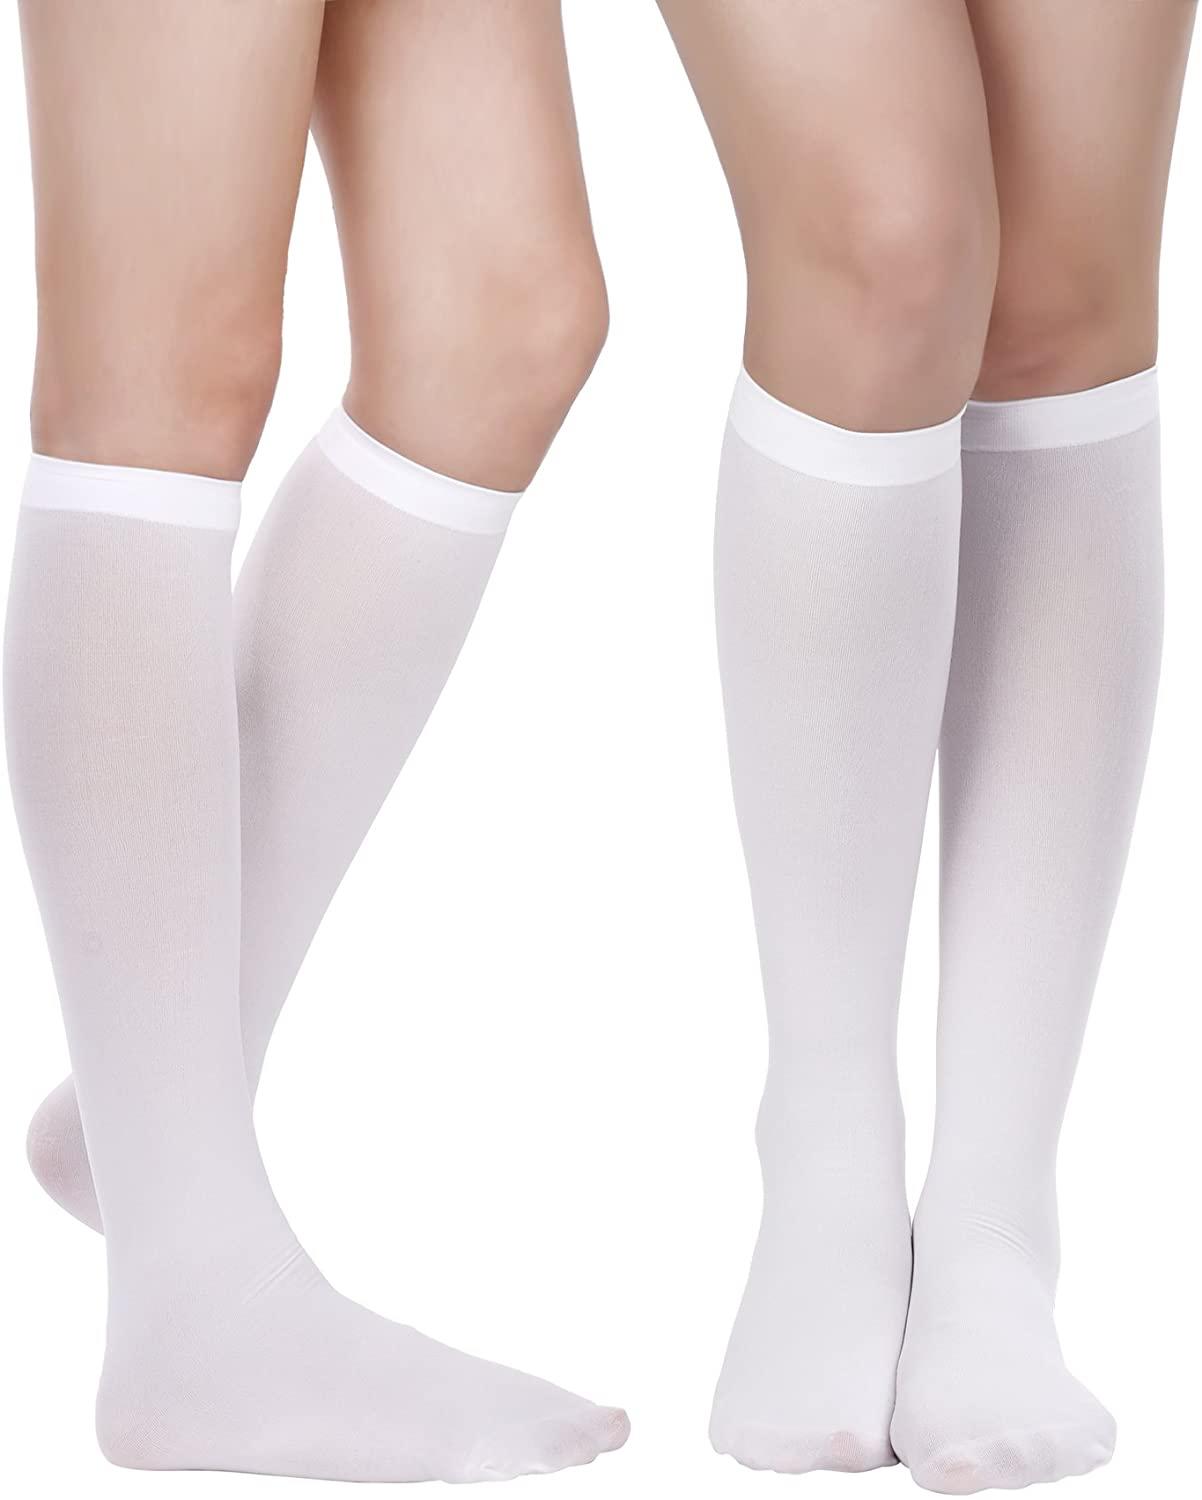 Knee-high white stockings 